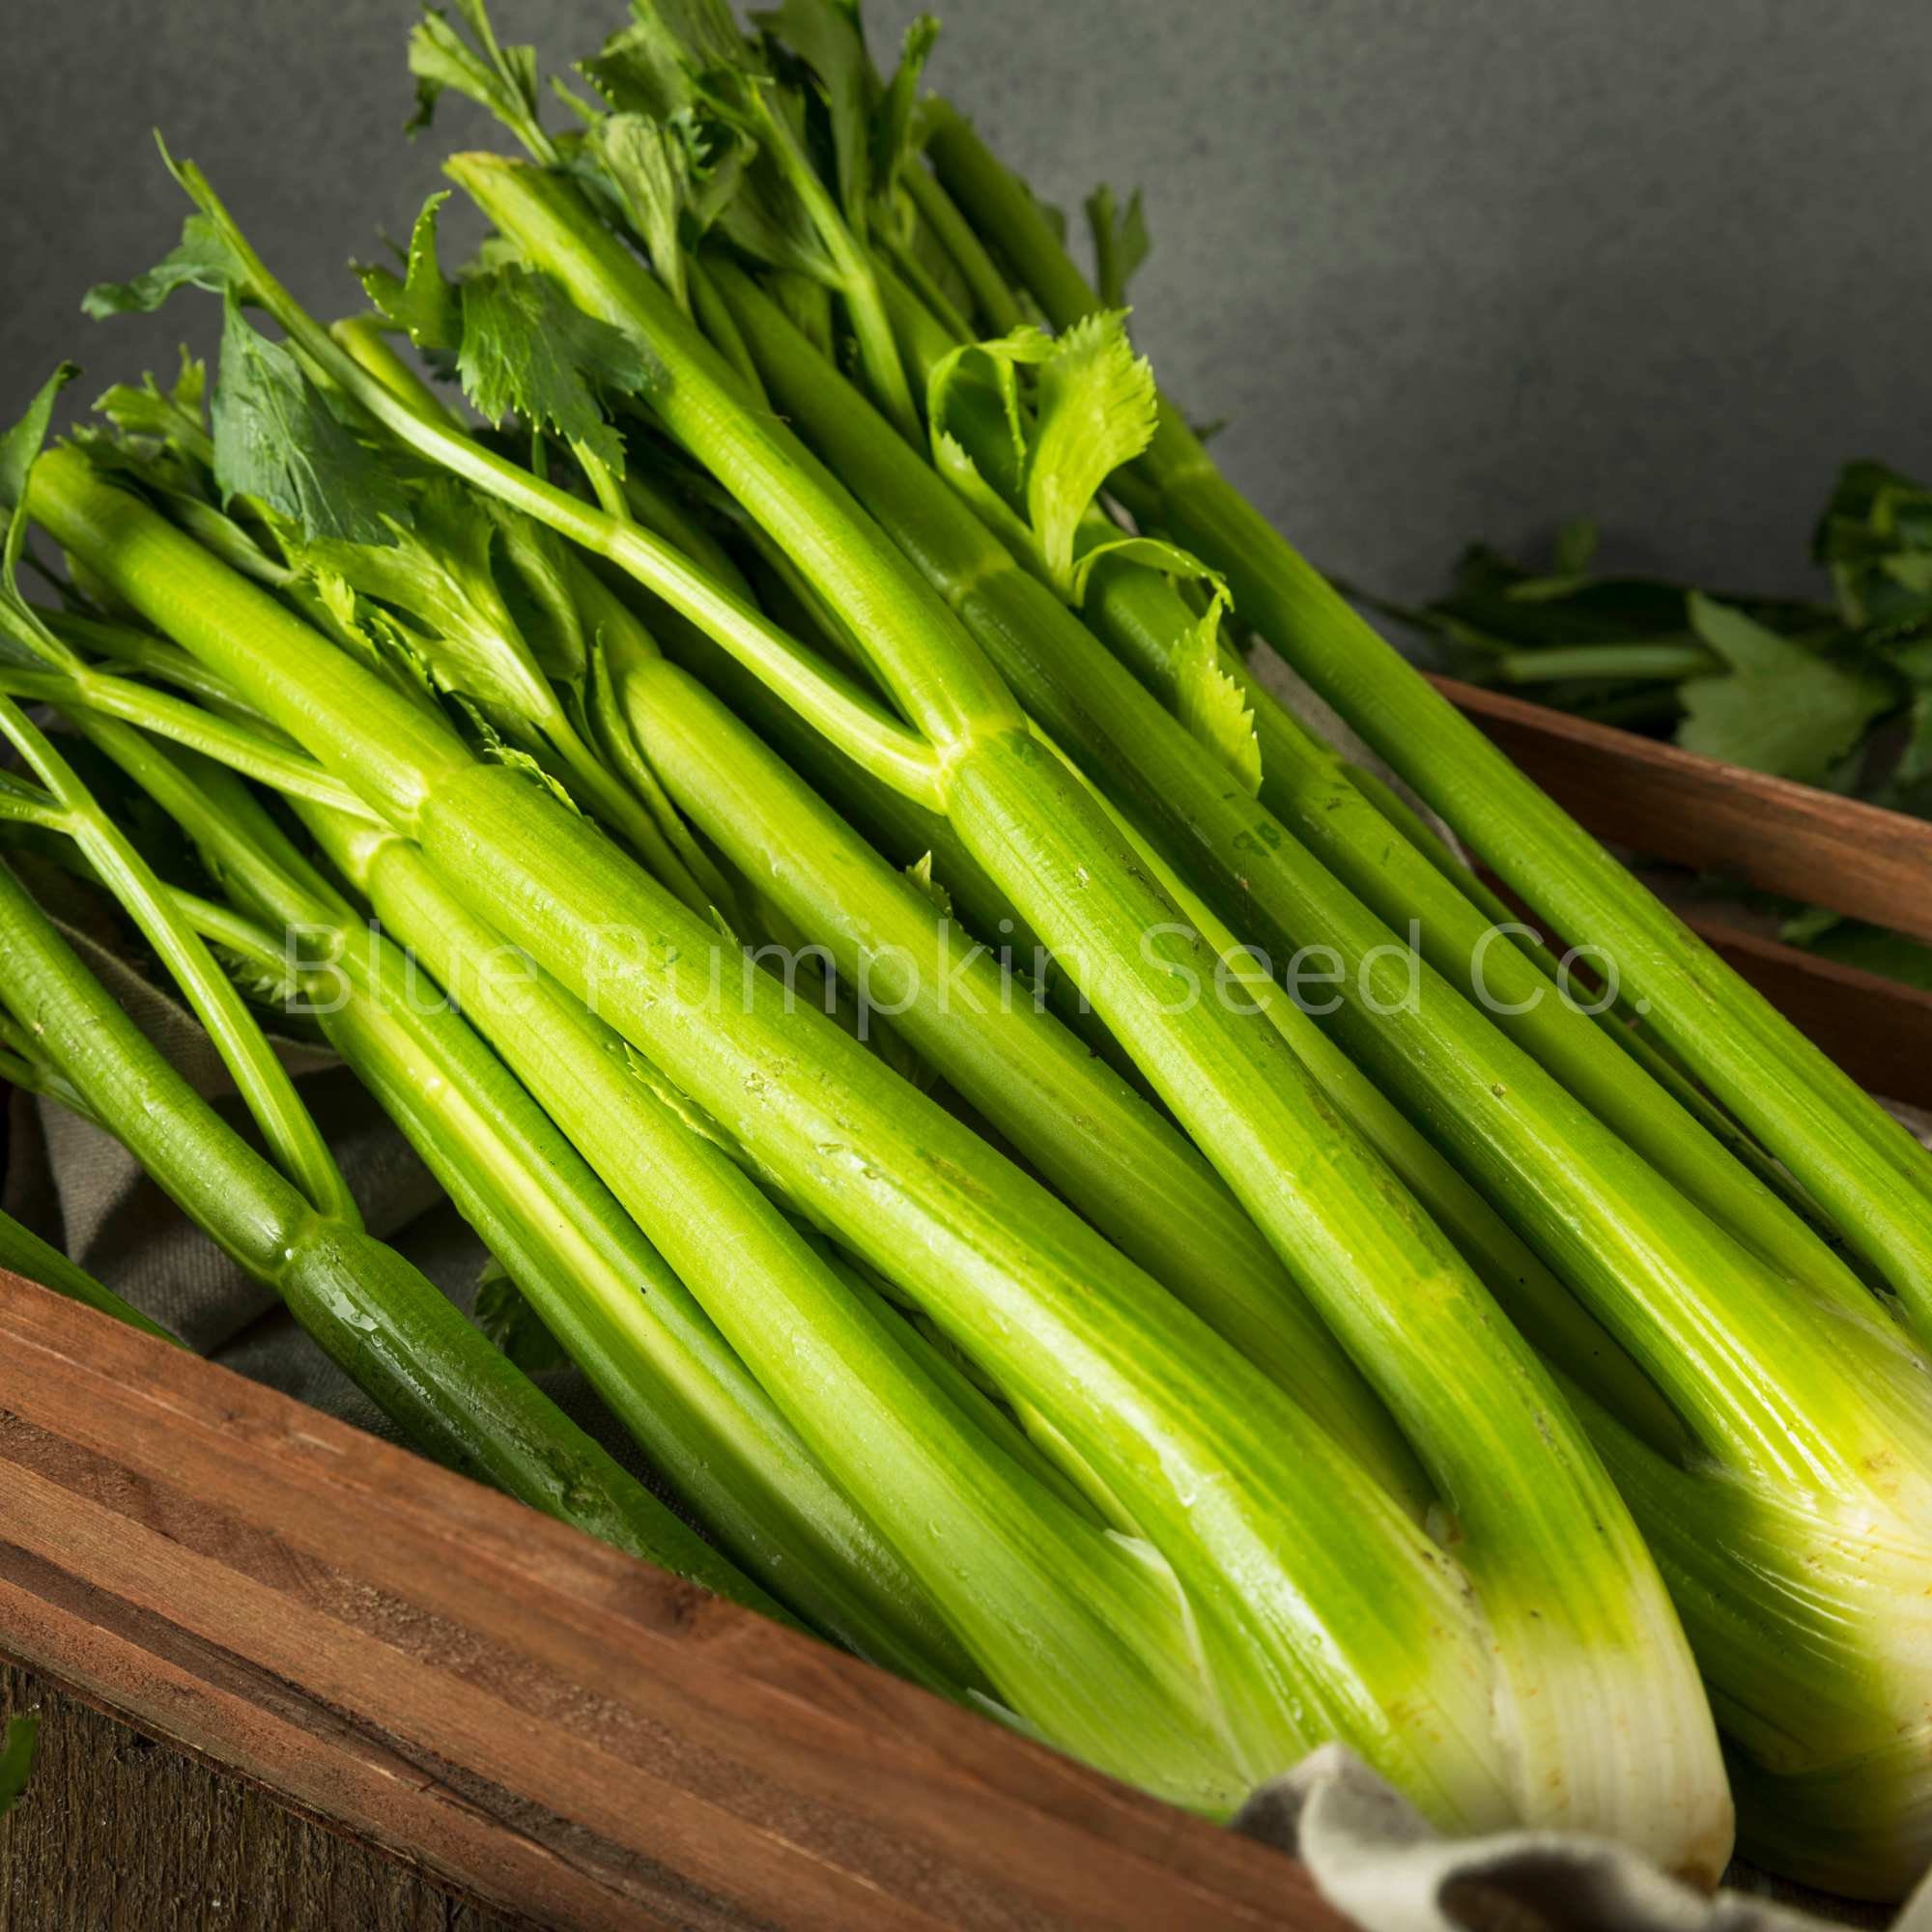 Tango Organic Celery heirloom Seeds Stalk Celery Celeriac